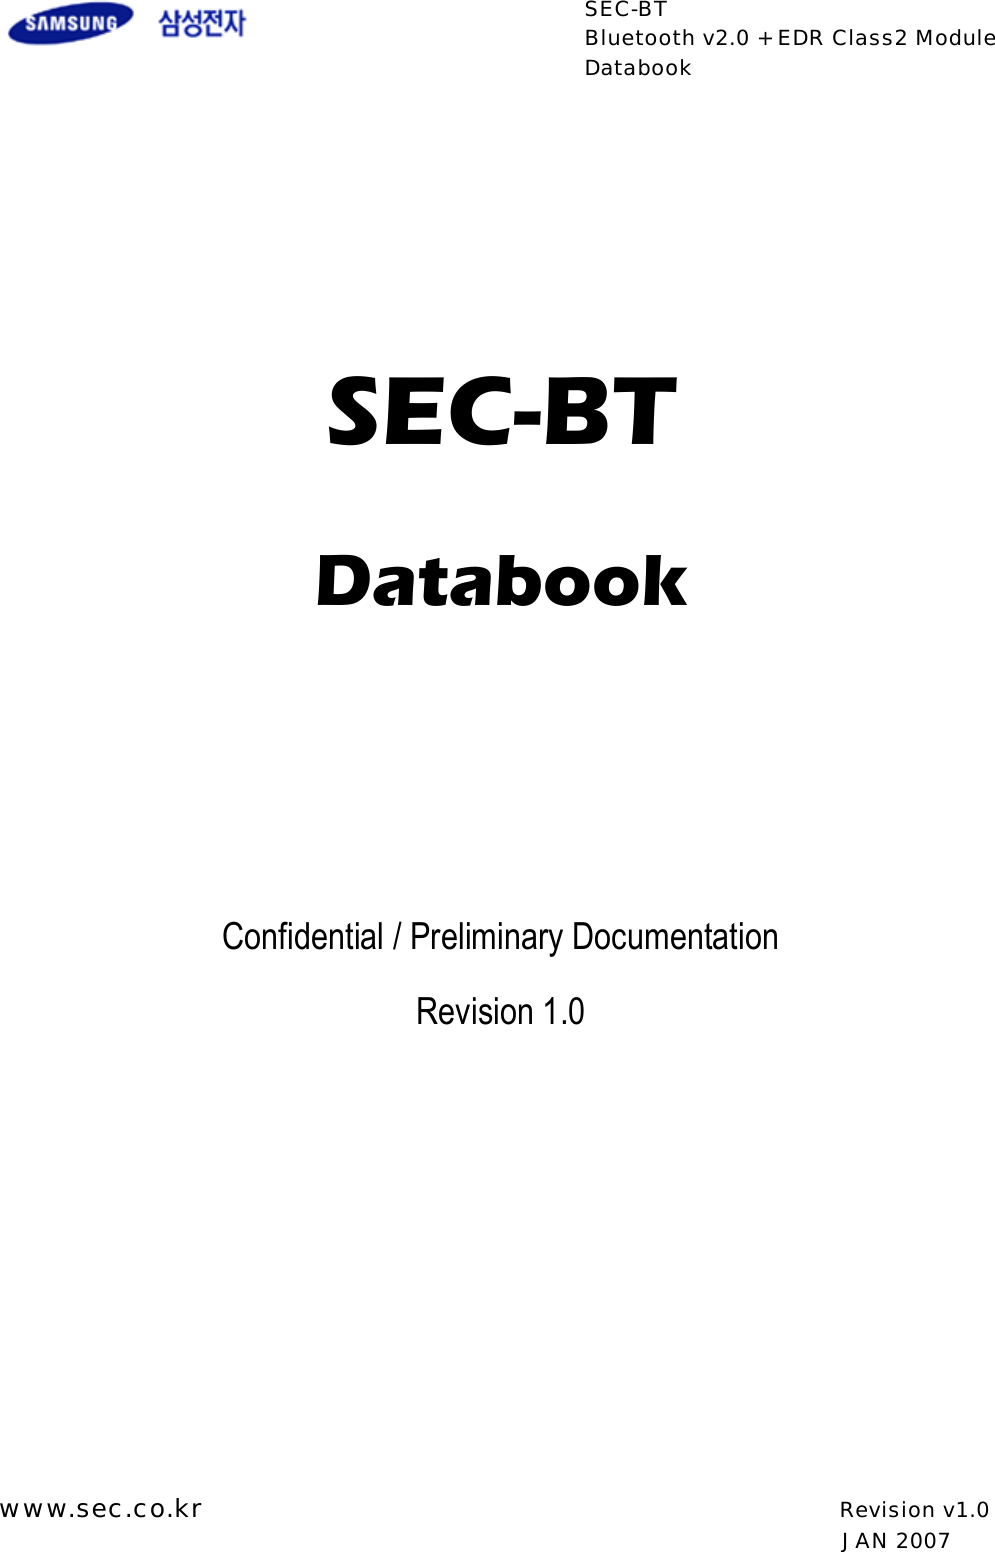  SEC-BT Bluetooth v2.0 + EDR Class2 Module Databook  www.sec.co.kr                                                   Revision v1.0                                                                                  JAN 2007       SEC-BT  Databook        Confidential / Preliminary Documentation Revision 1.0          